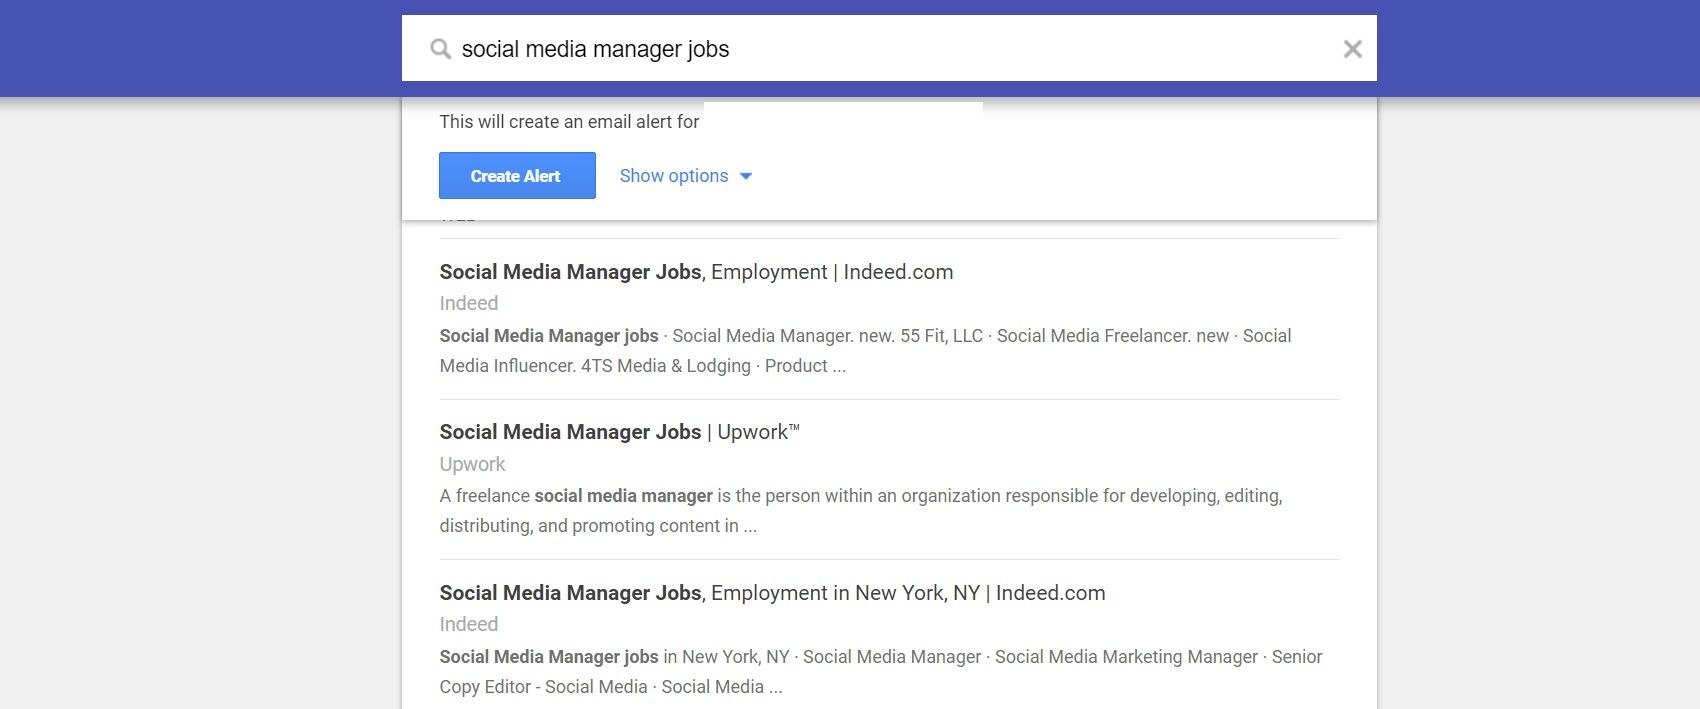 social media manager jobs on google alerts